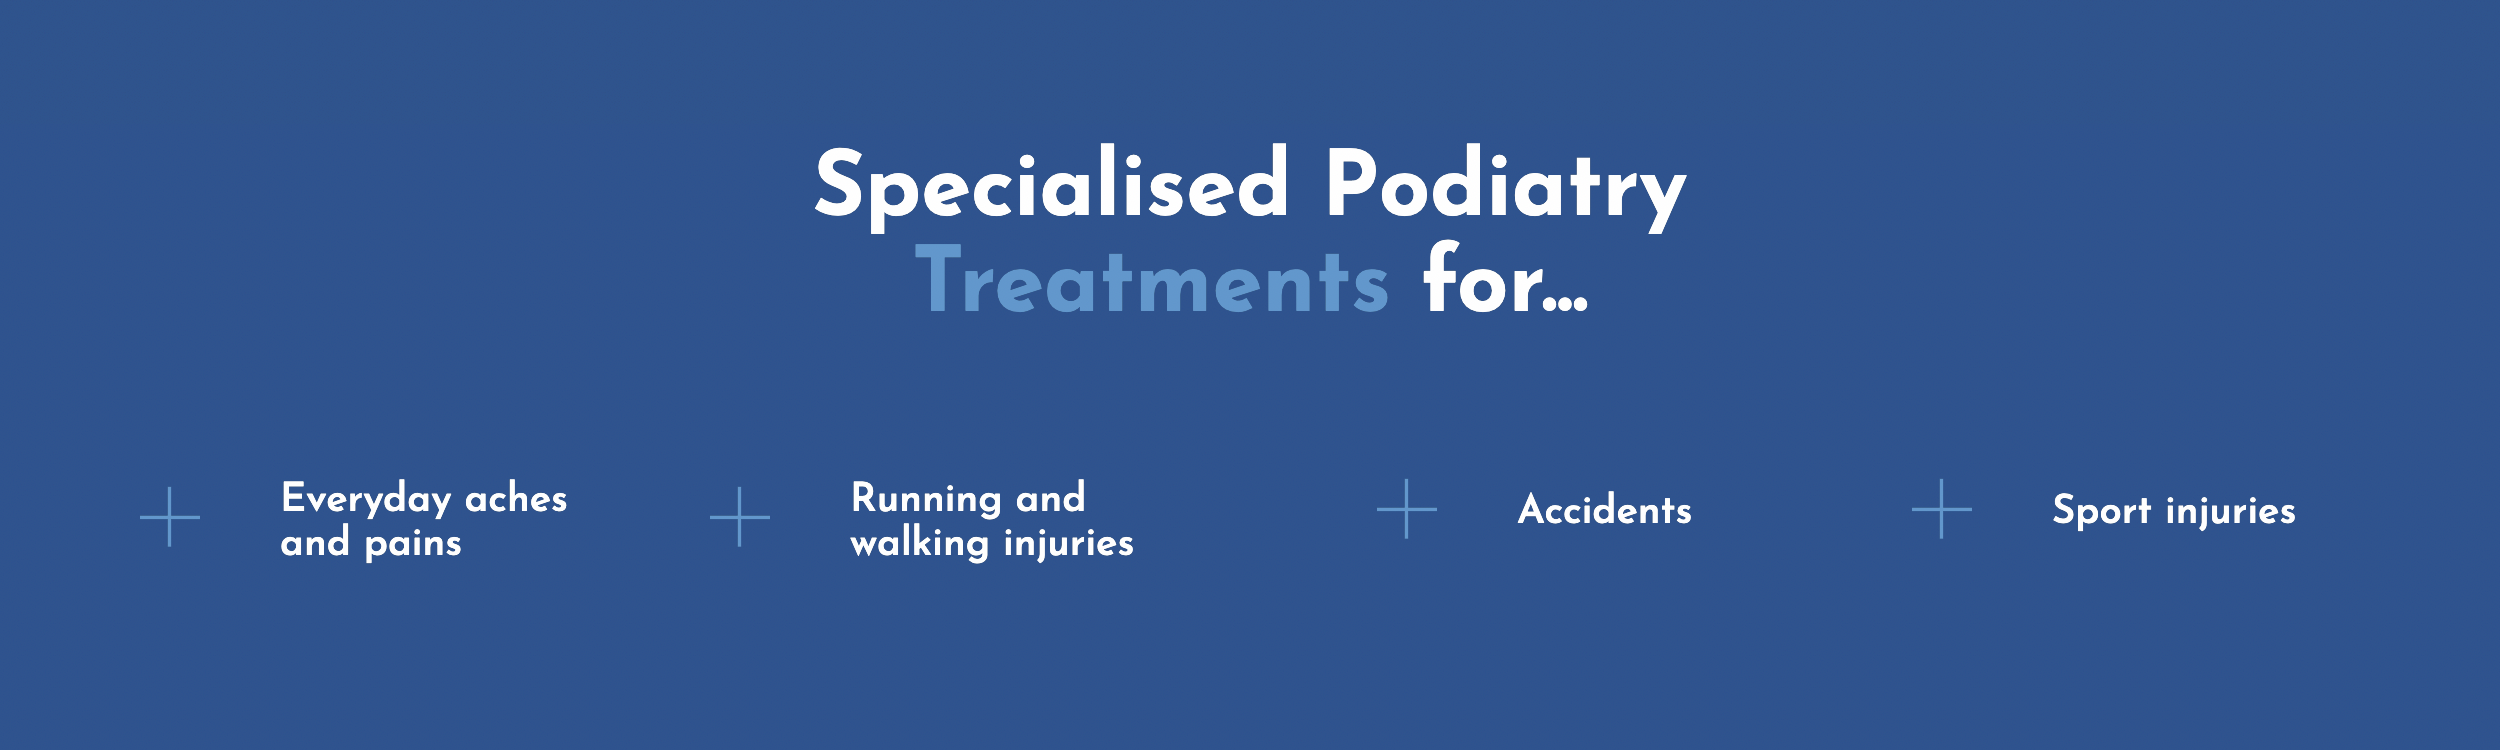 Specialised Podiatry Treatments